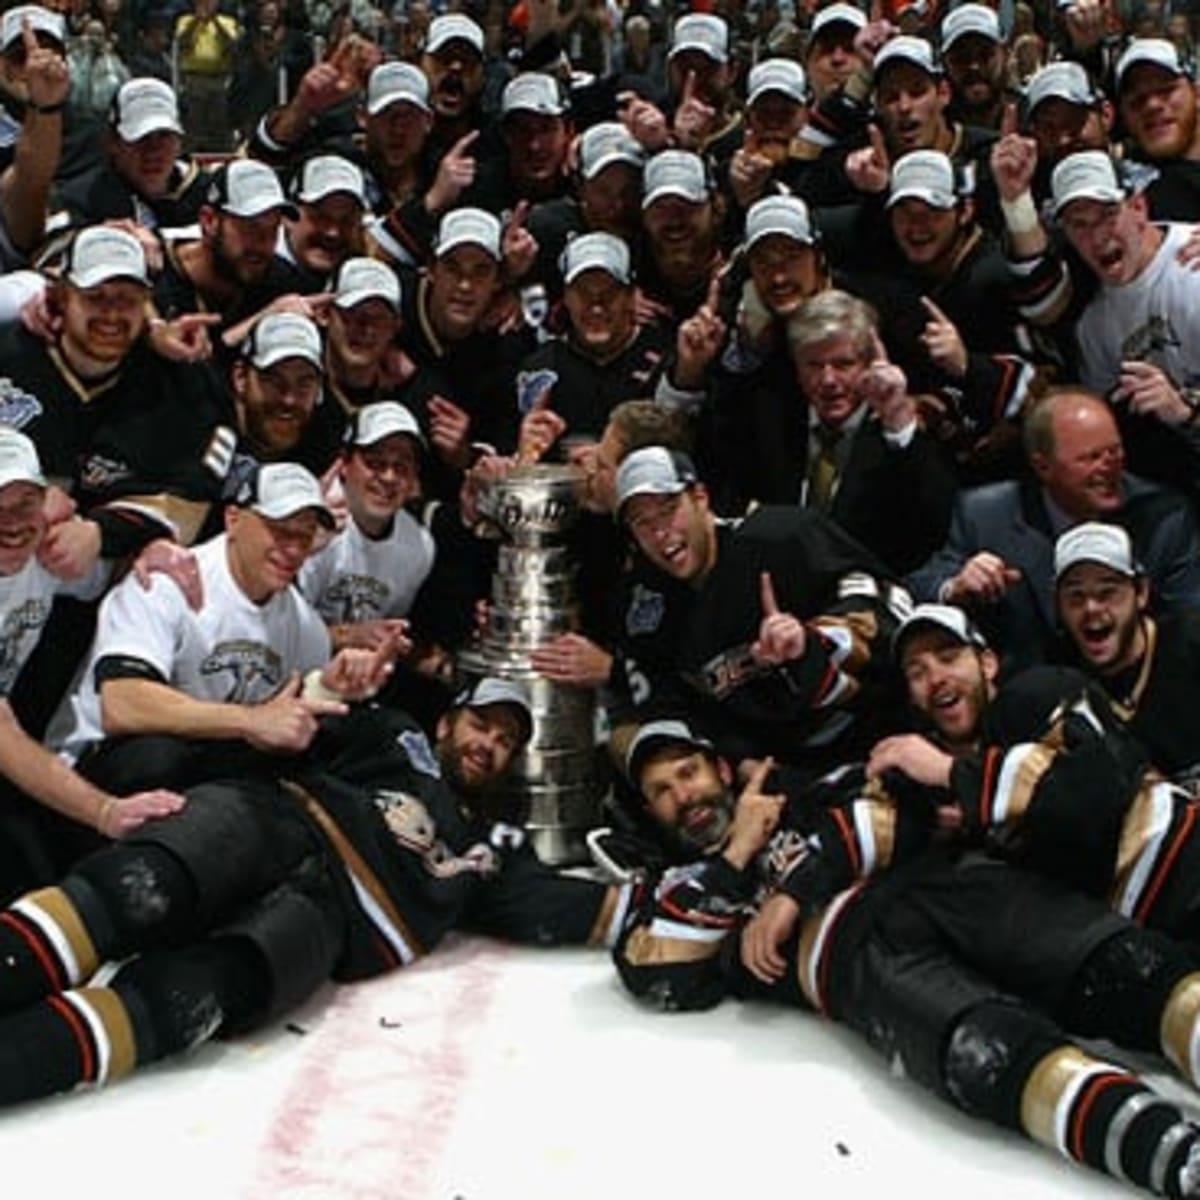 https://thehockeynews.com/.image/ar_1:1%2Cc_fill%2Ccs_srgb%2Cfl_progressive%2Cq_auto:good%2Cw_1200/MTg1MDUxMDE5MDUzODM1NjA5/the-straight-edge-were-the-07-ducks-the-best-stanley-cup-champions-of-all-time.jpg